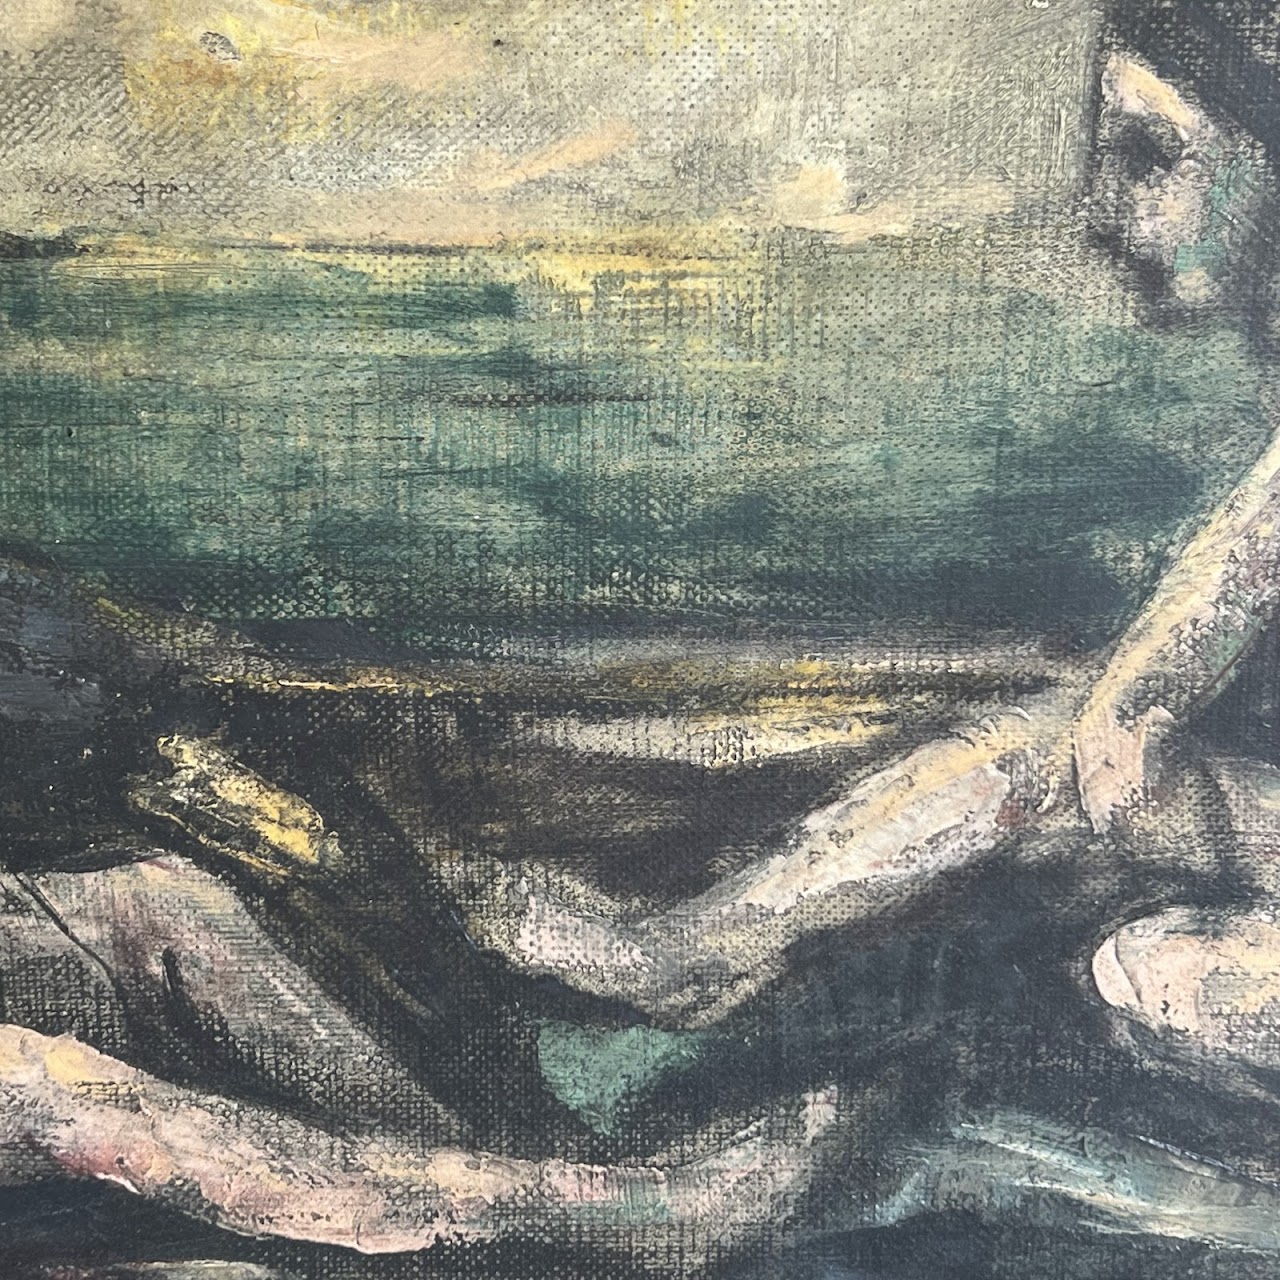 Ernst Ludwig Kirchner Signed Modernist Oil Painting